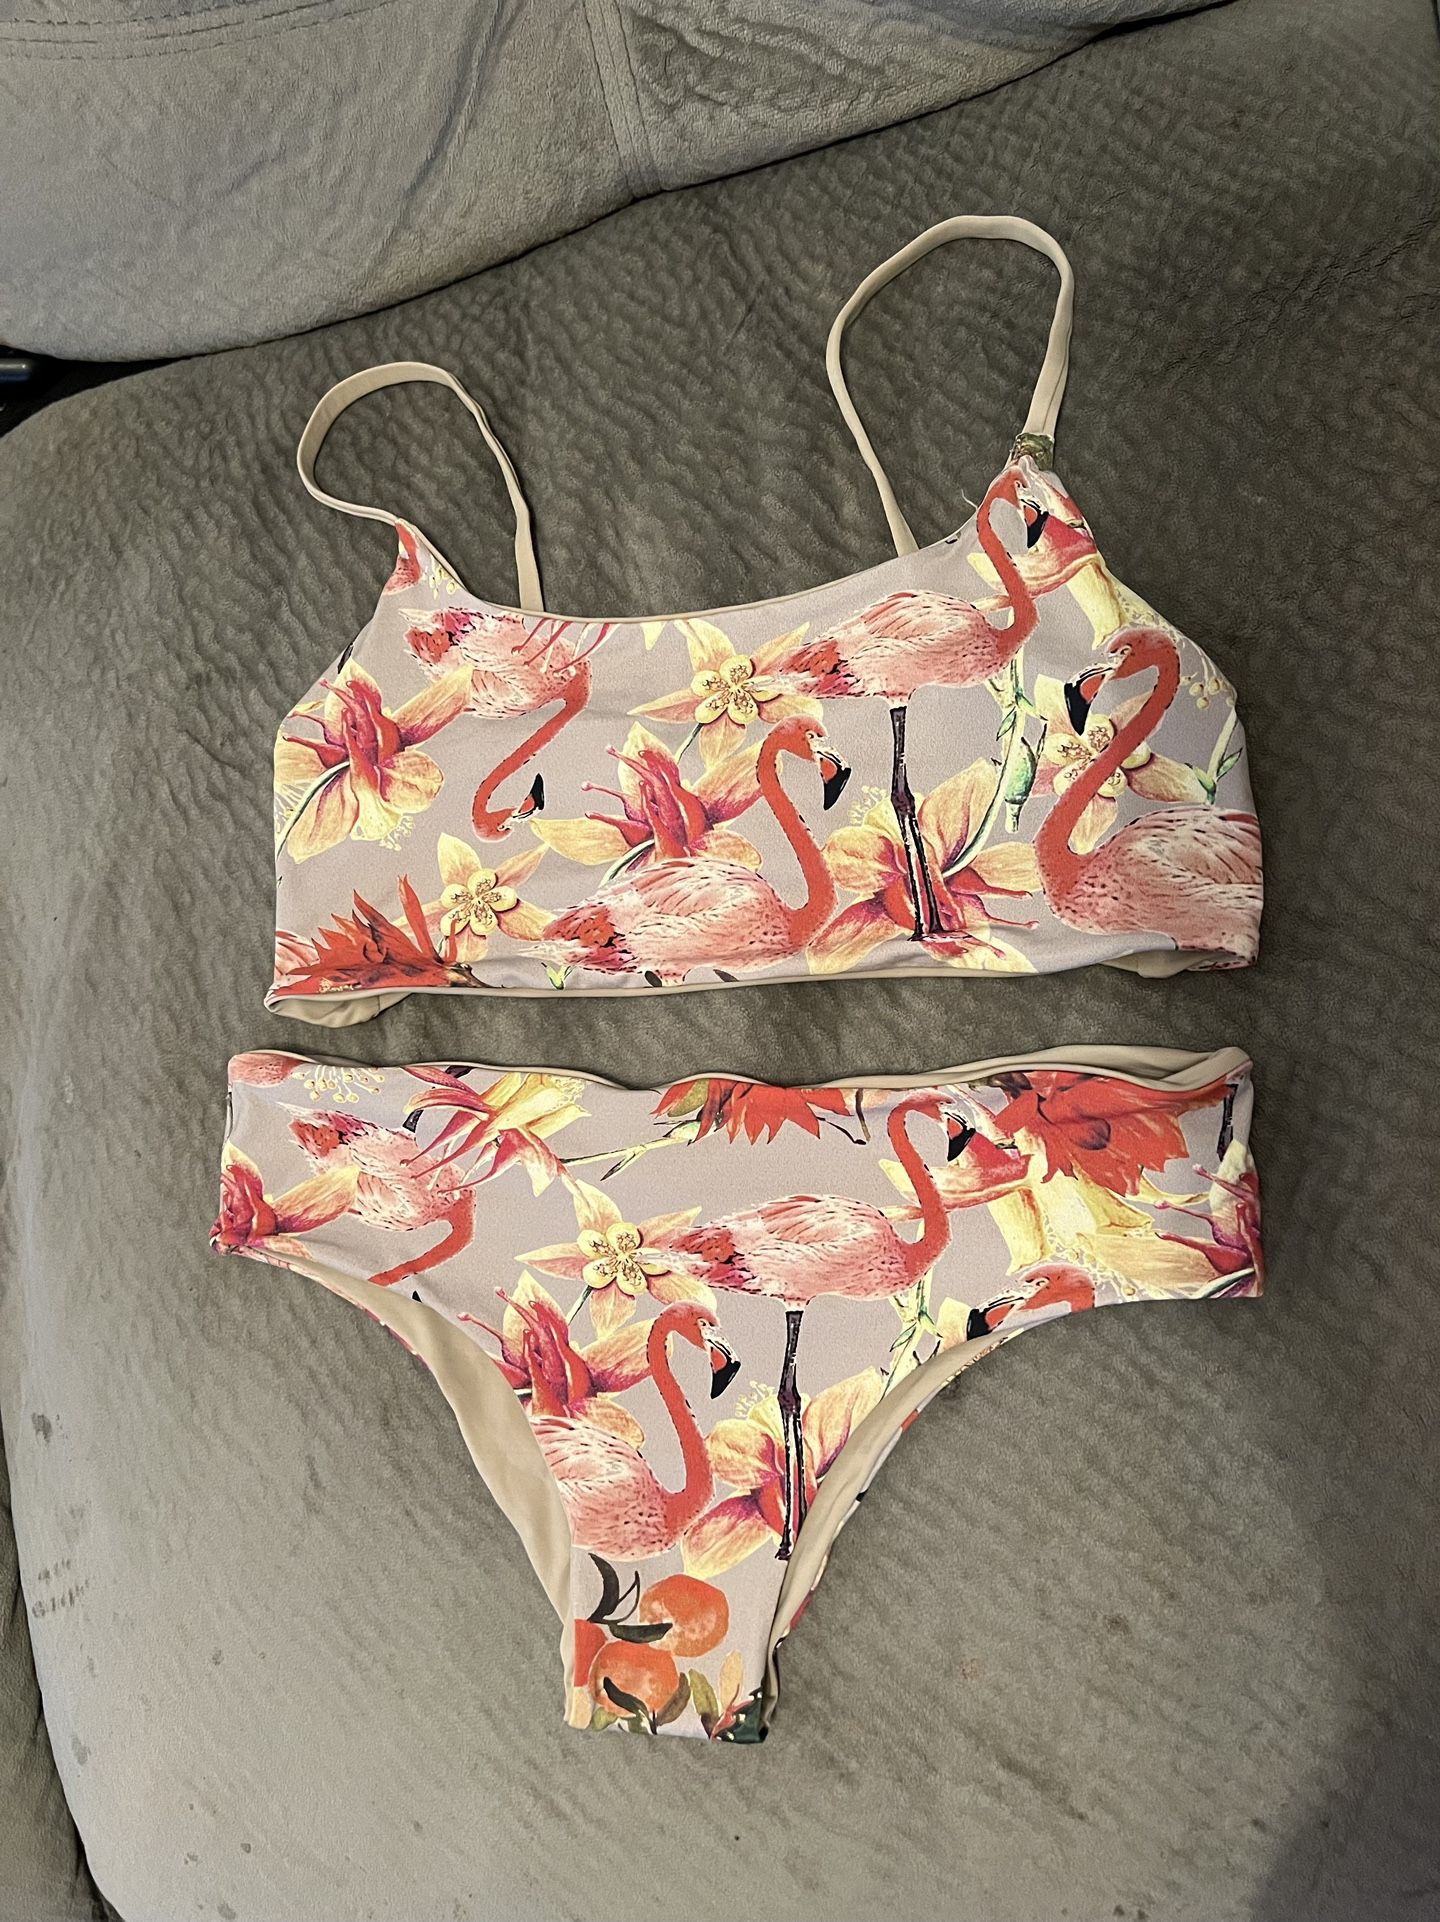 San Lorenzo Bikini Set - Size M - PICKUP IN AIEA - I DON’T DELIVER 